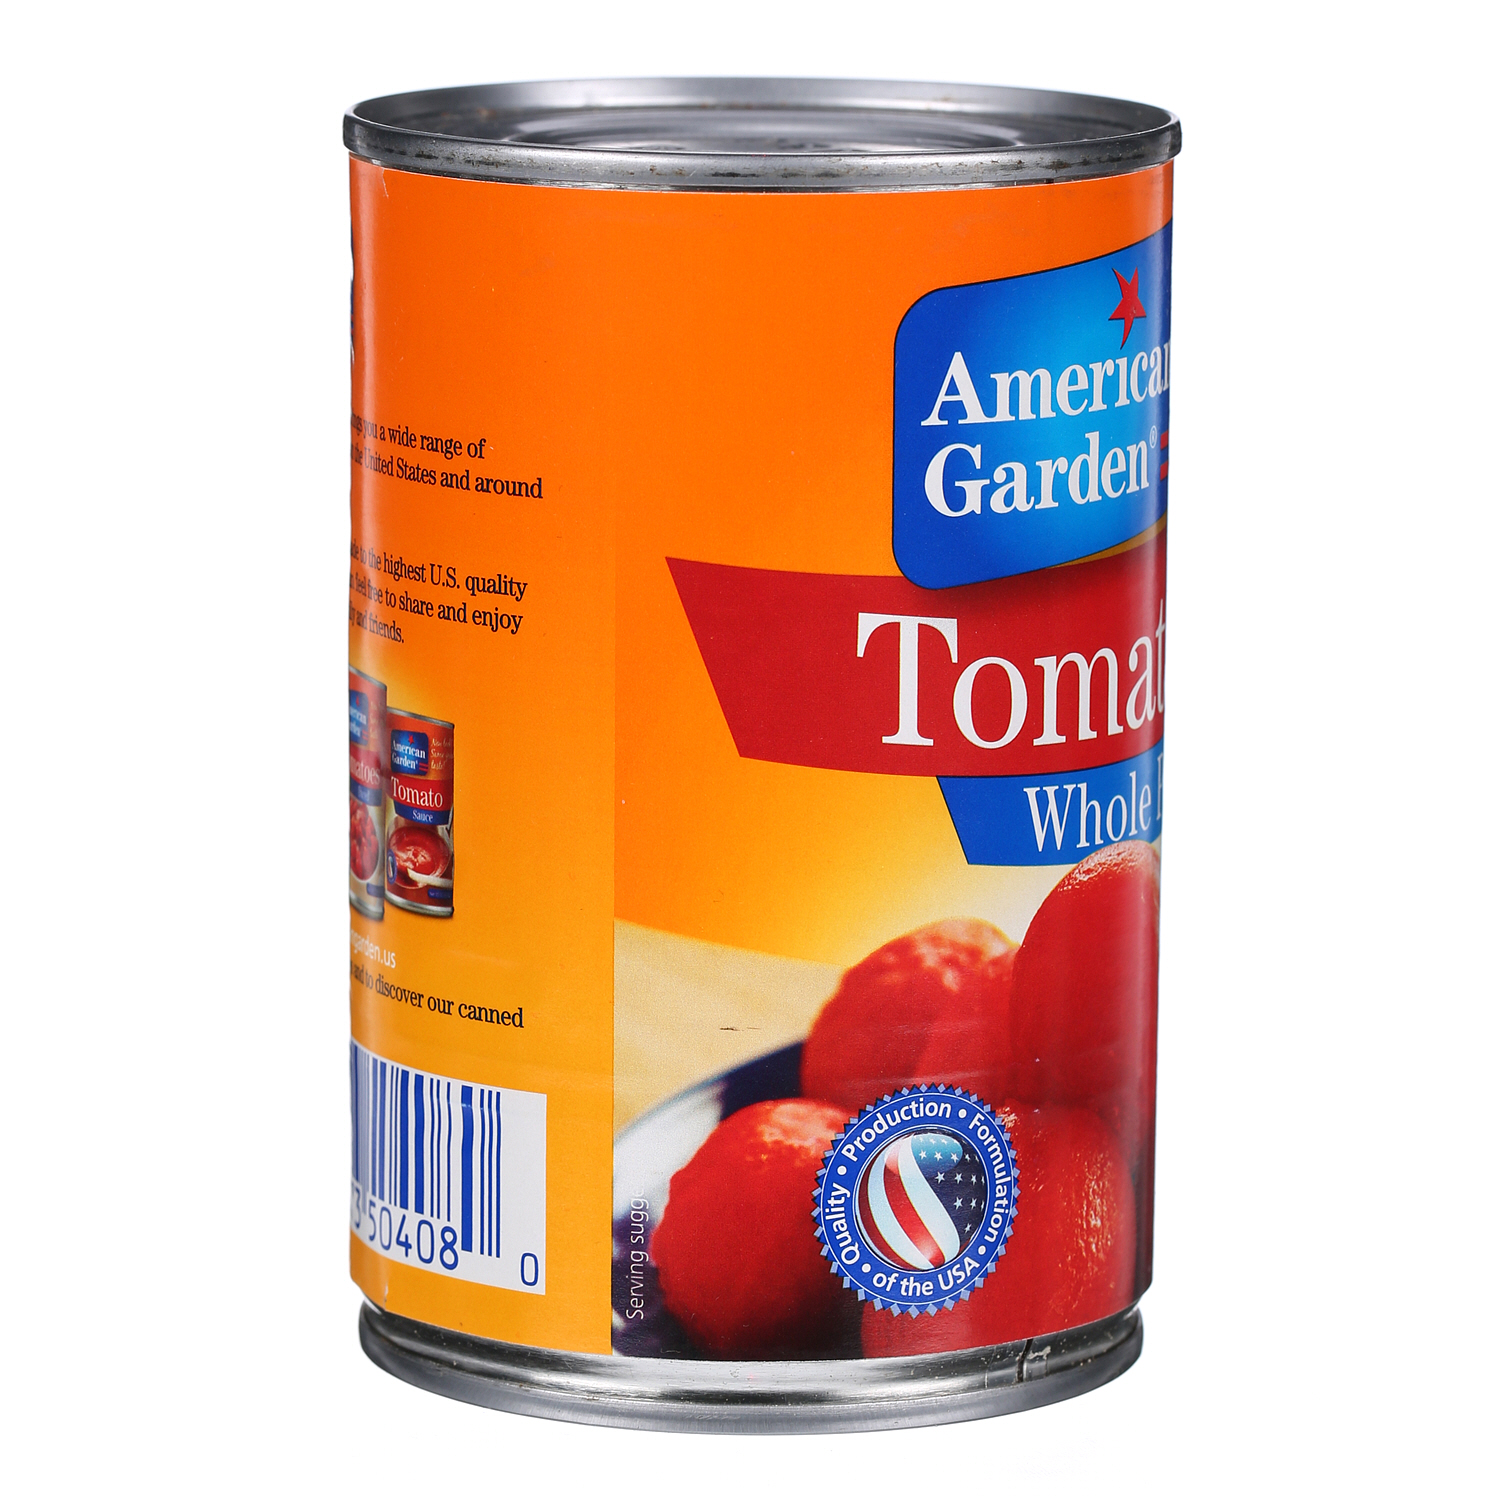 American Garden Whole Peeled Tomatoe 15 Oz